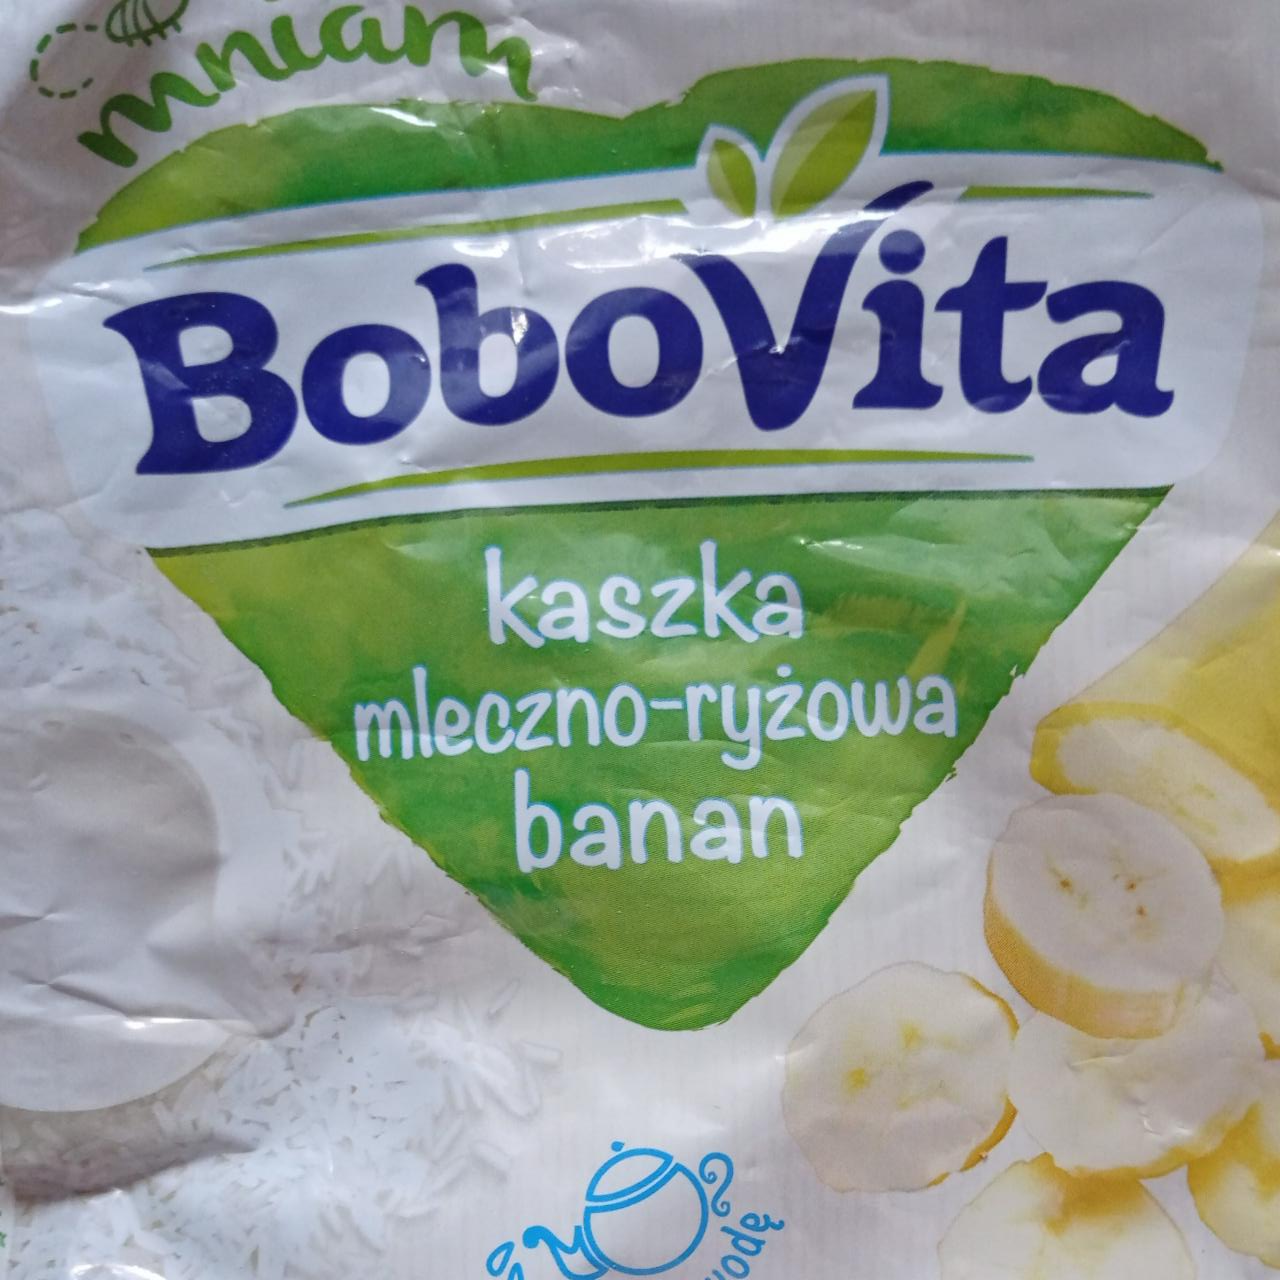 Fotografie - BoboVita kaszka mleczno-ryzowa banan